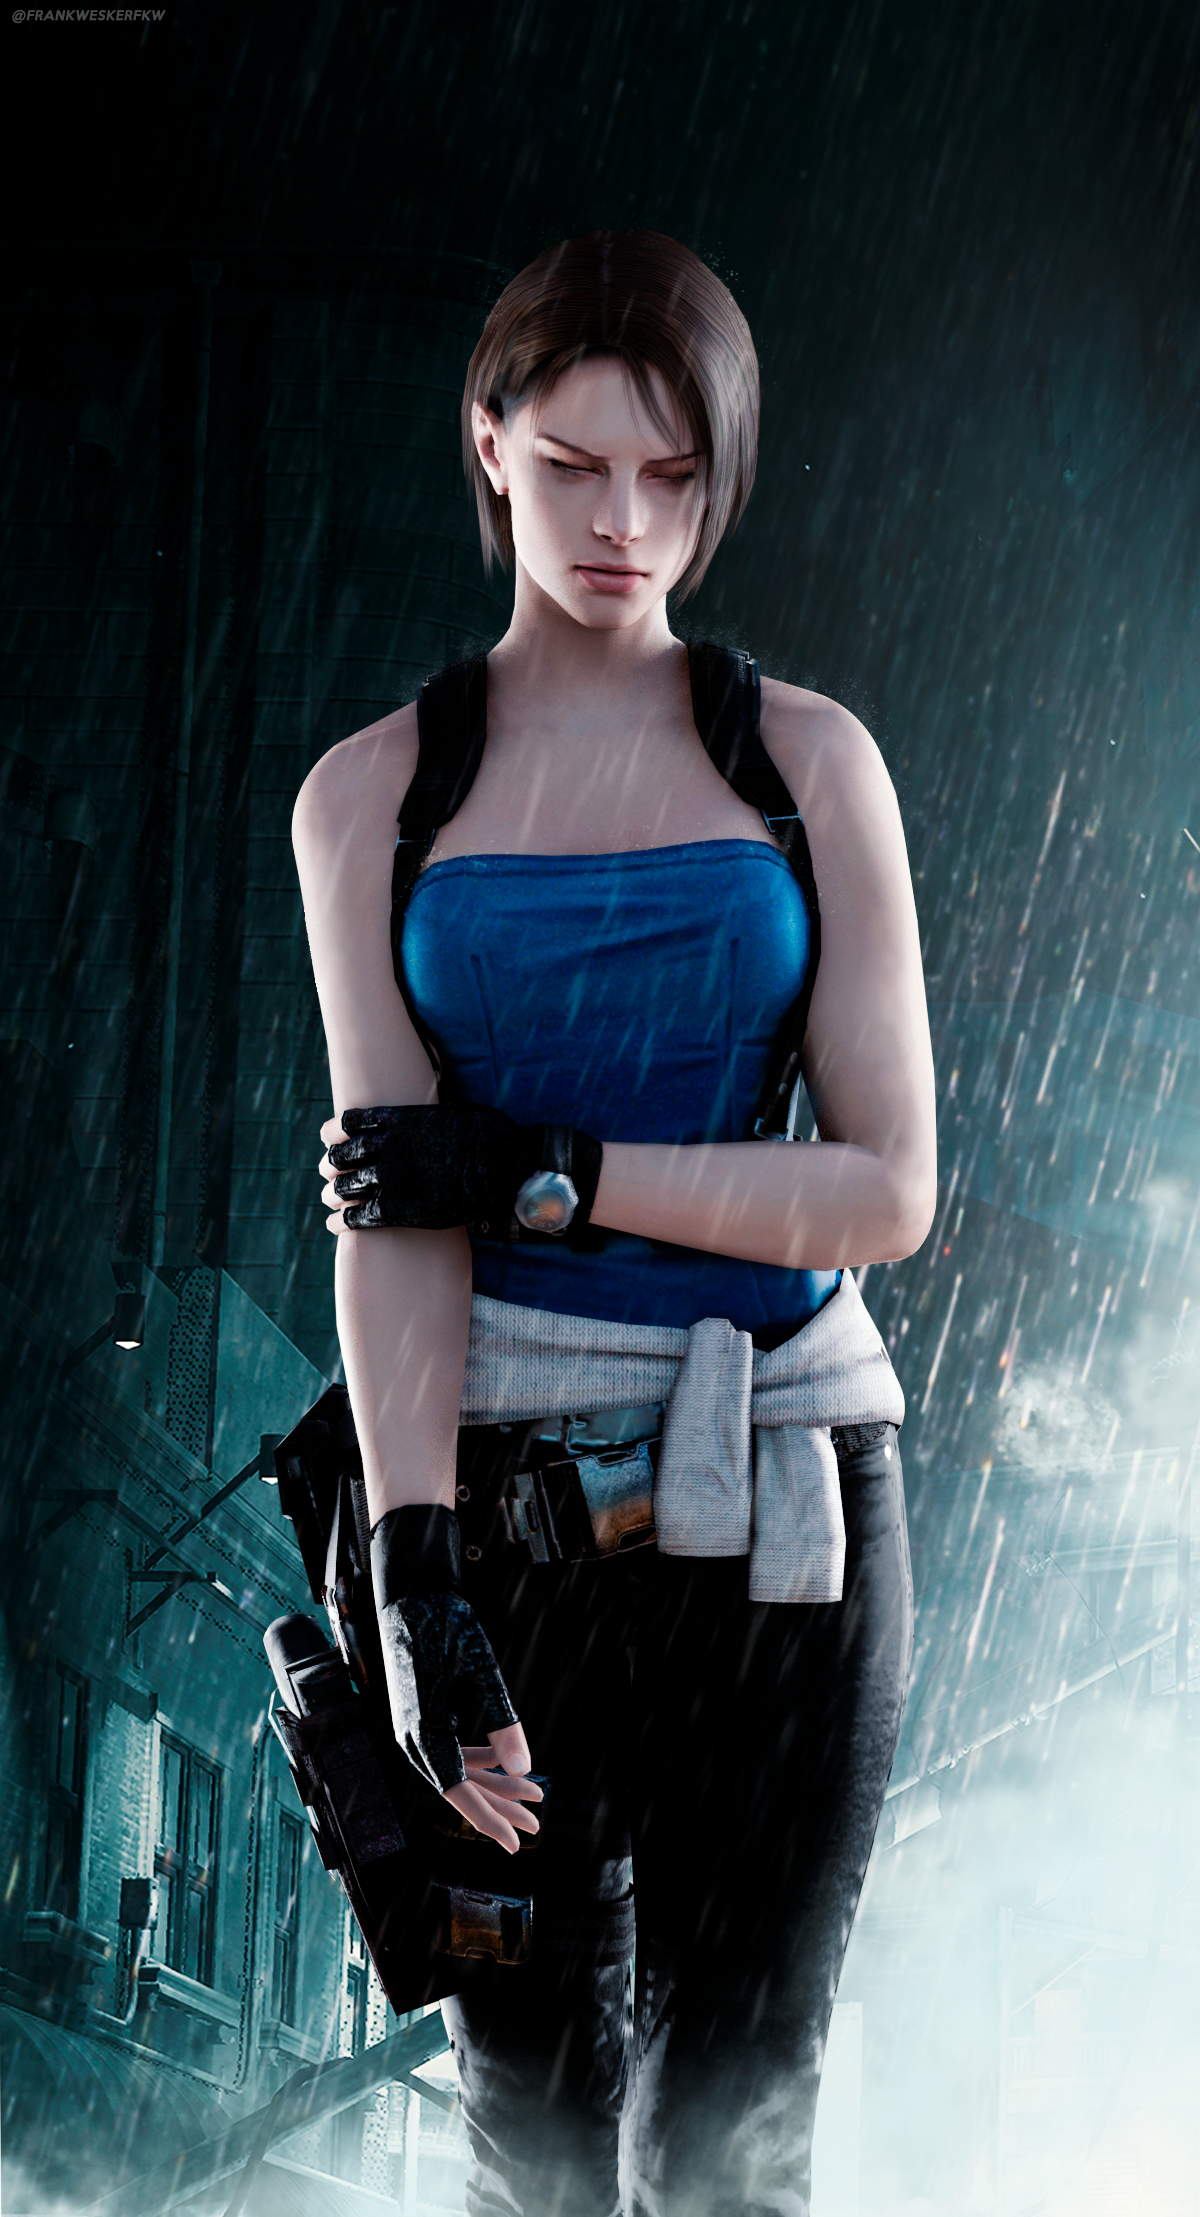 Jill Valentine, Resident Evil 3